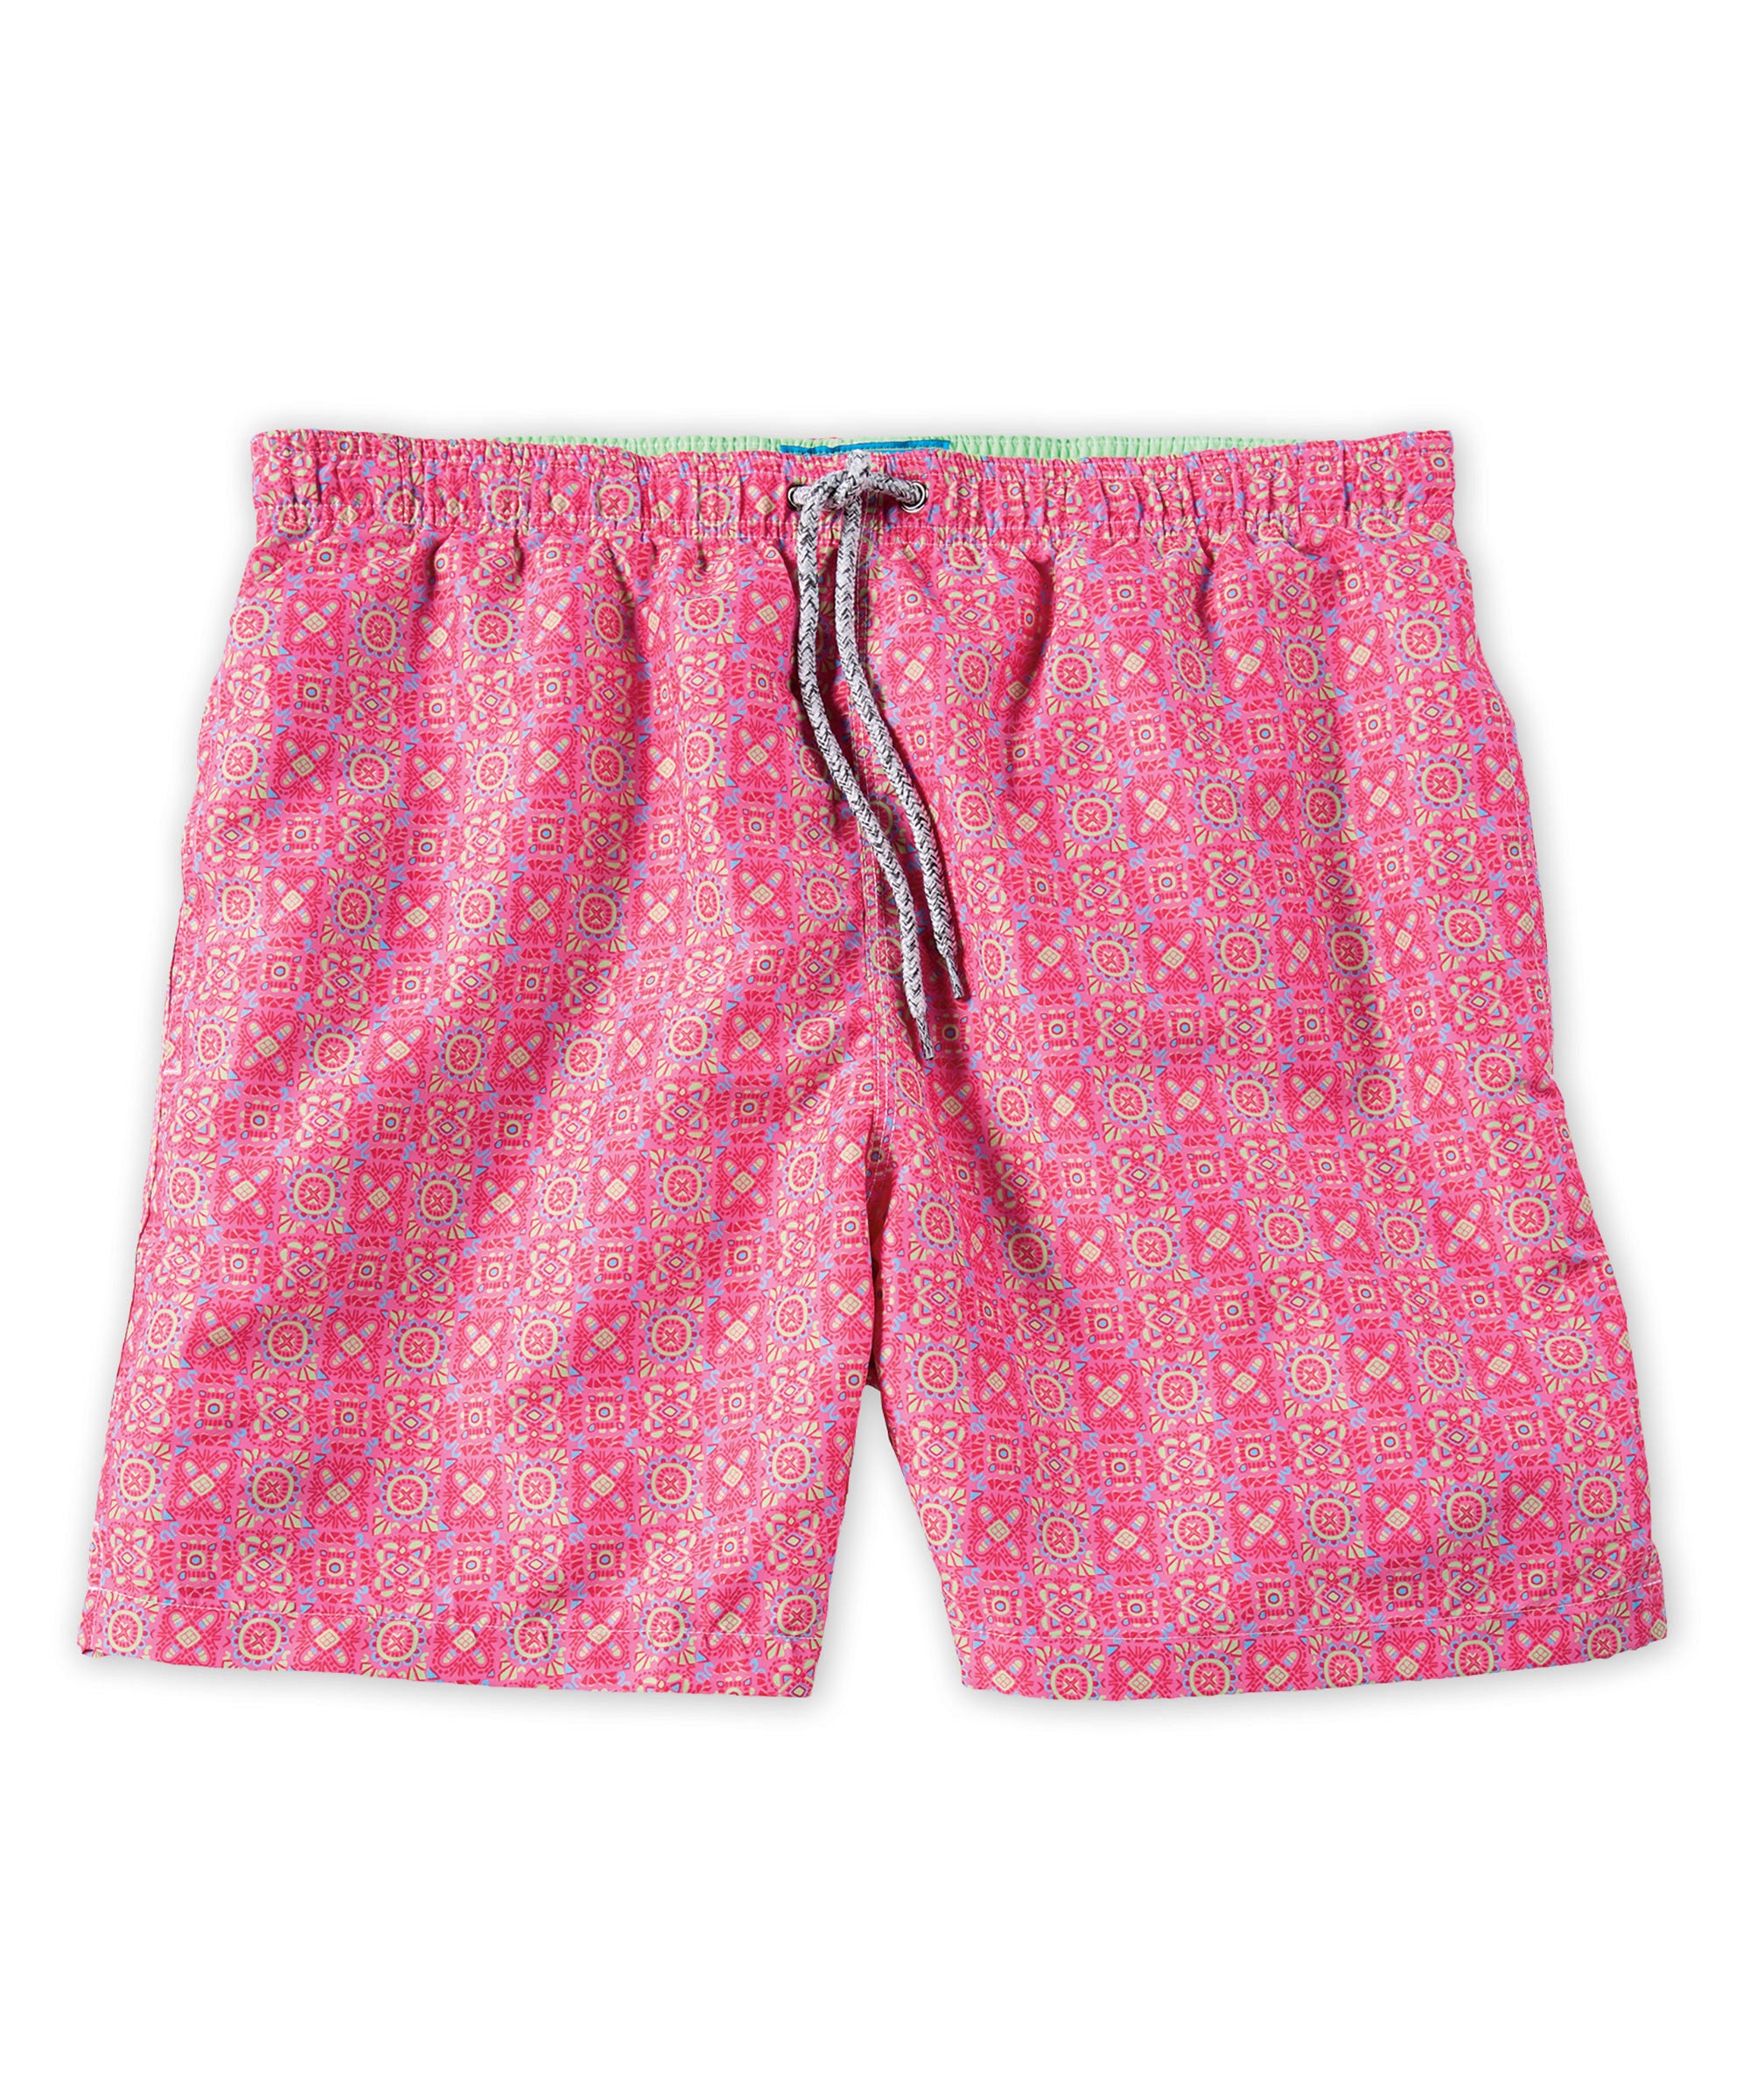 WATERCOLOR MARBLE MS. 2 - Woven fabric for bermuda shorts - swim trunks -  Printed patterns fabrics - Dresówka.pl